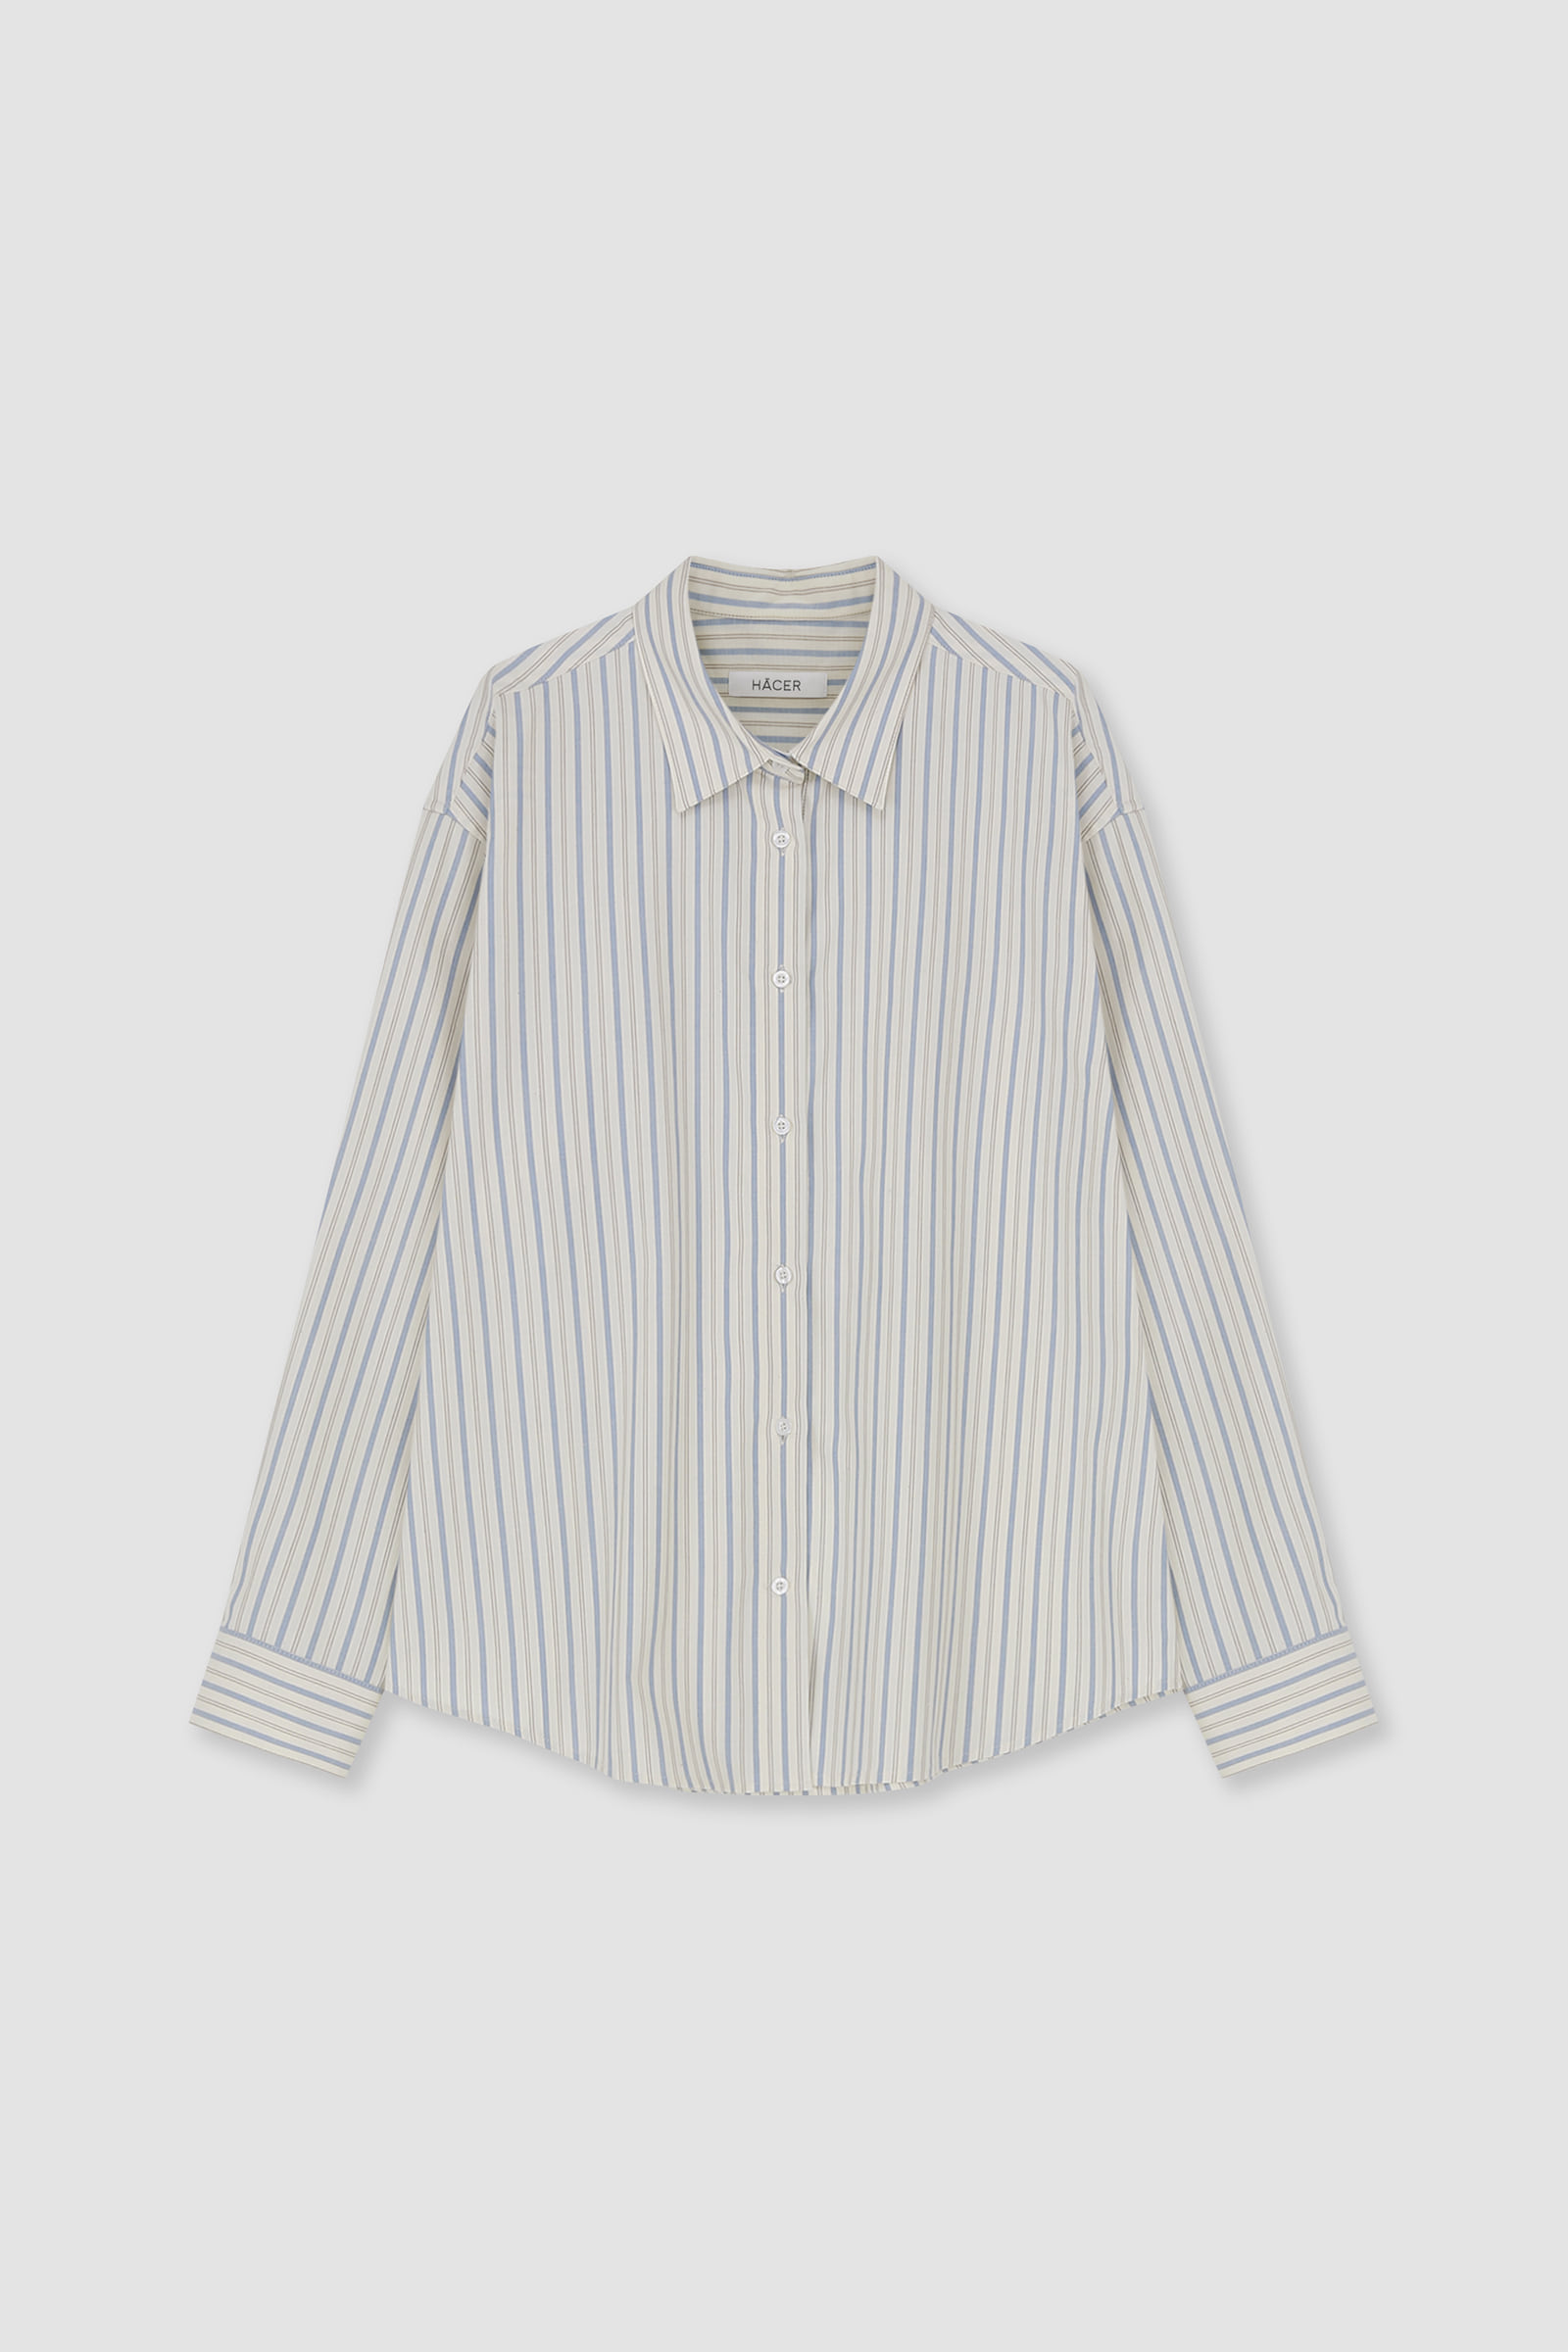 Standard Stripe Shirt